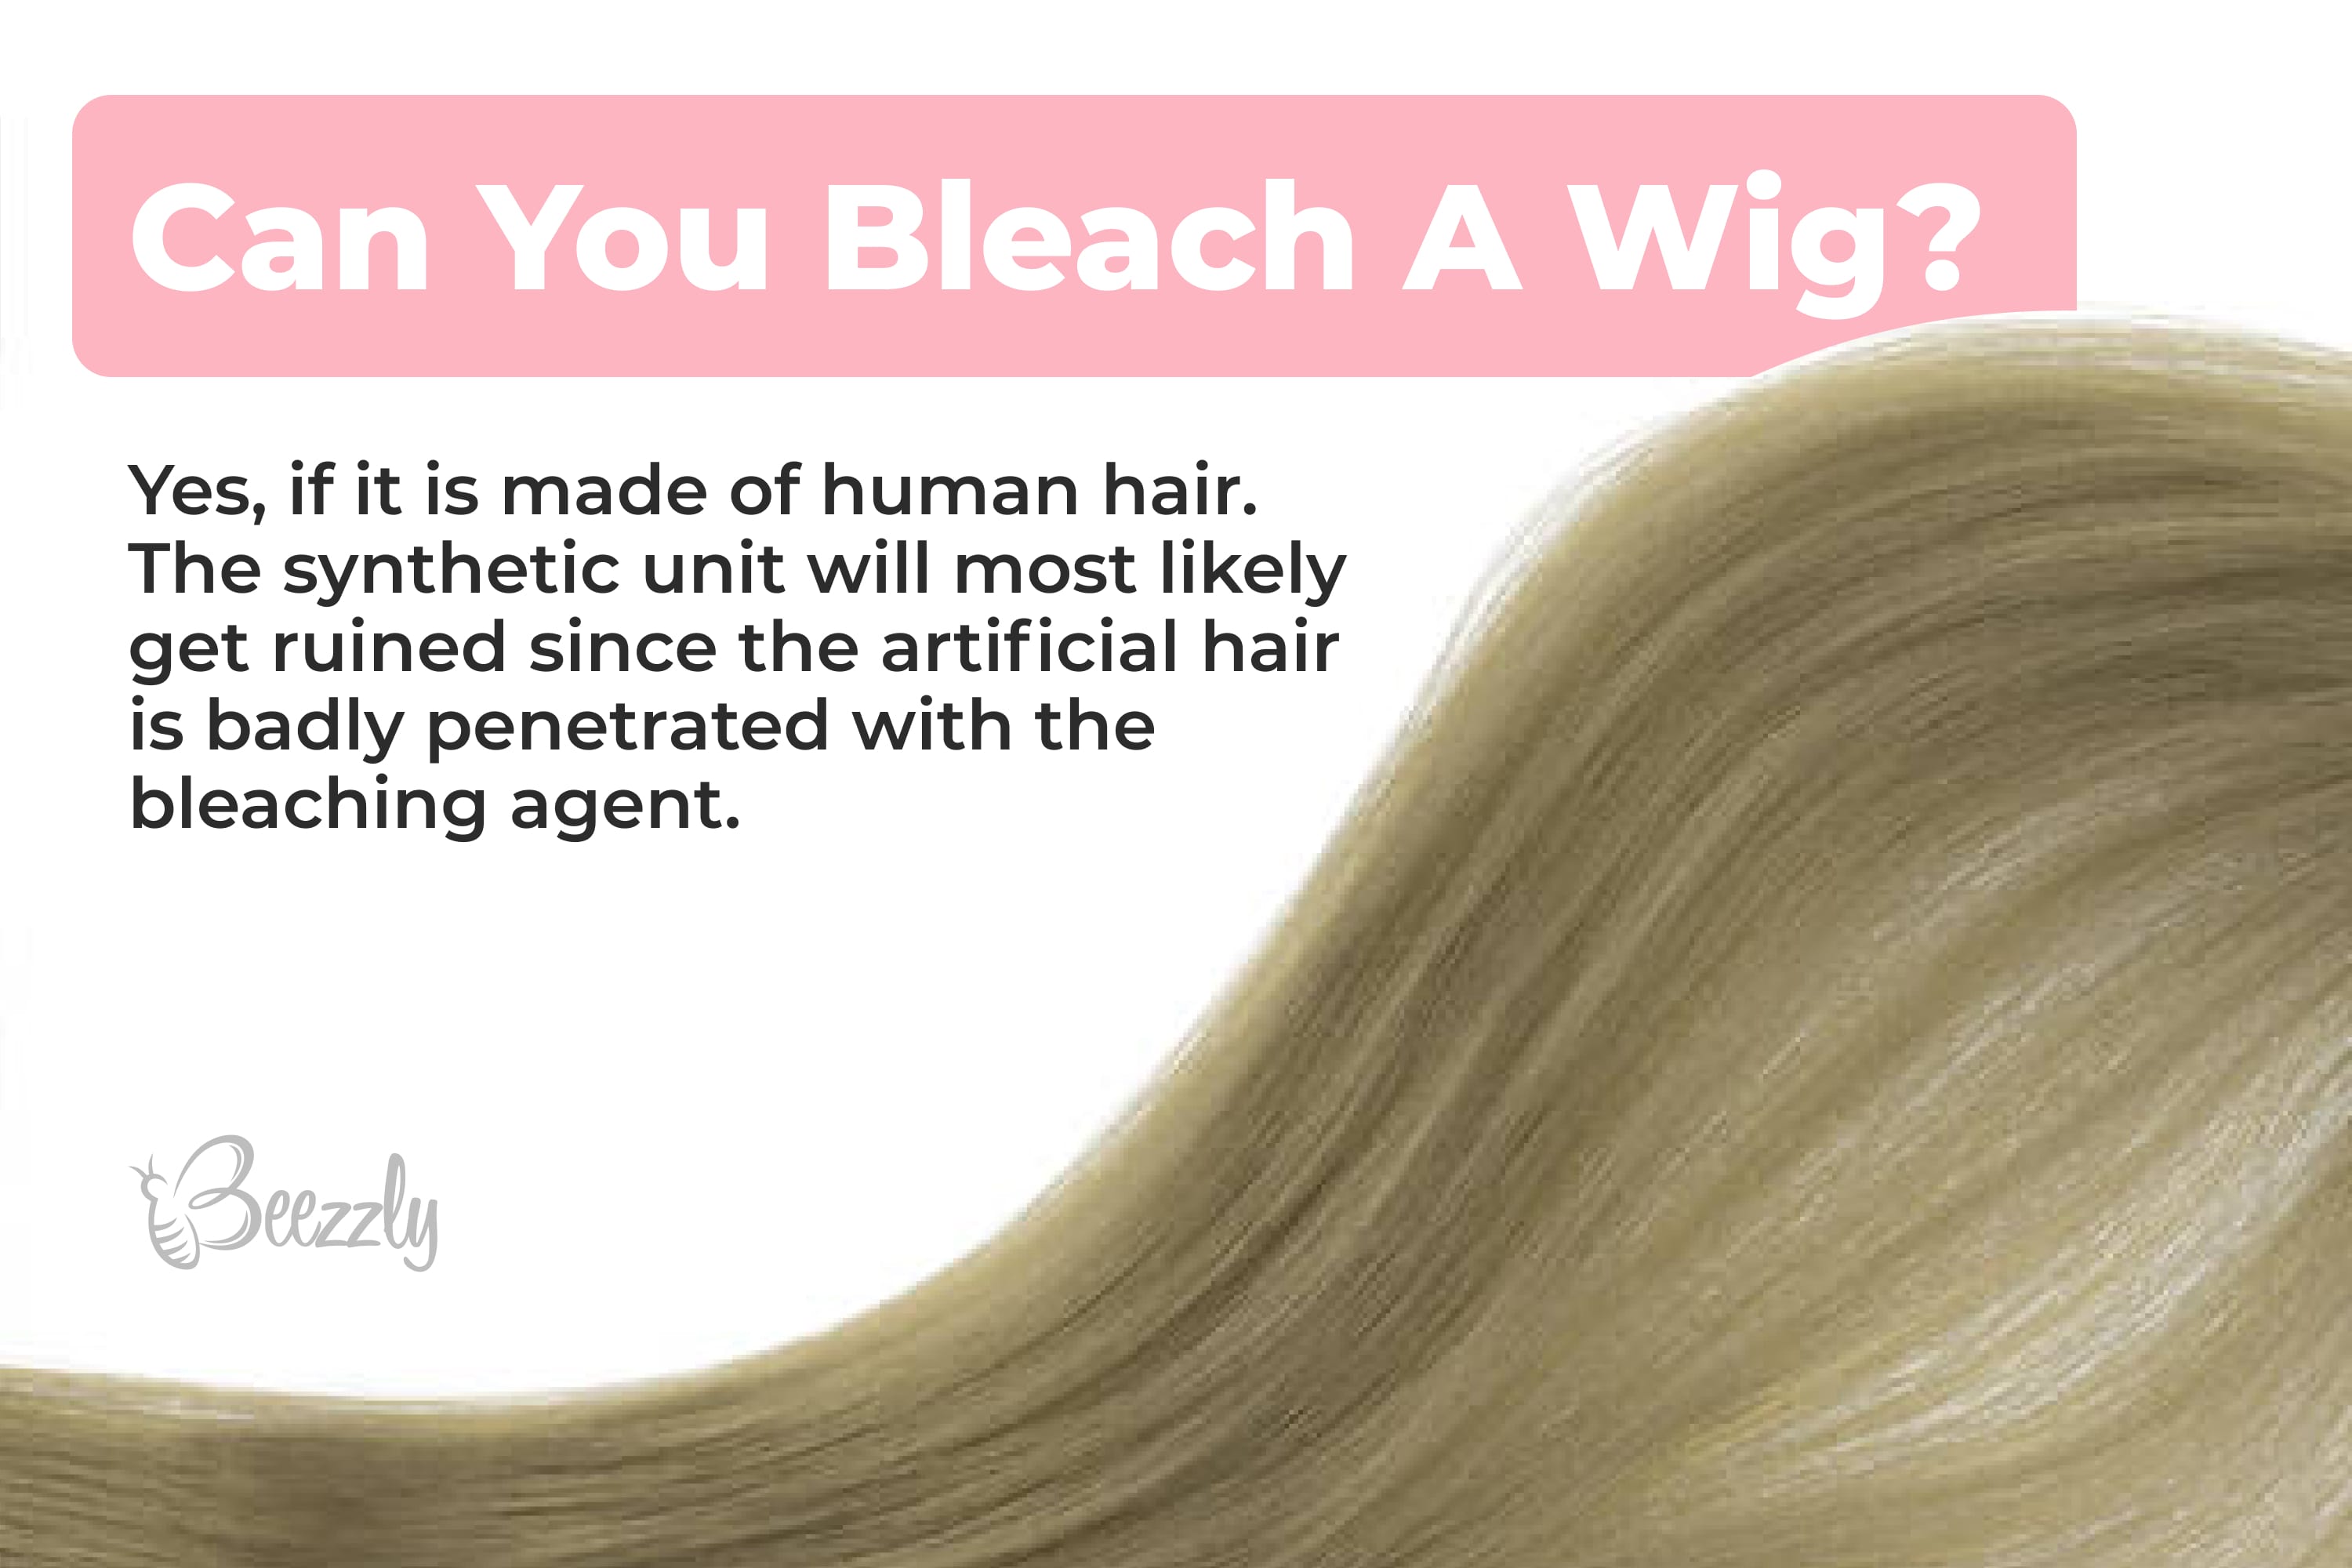 Can you bleach a wig